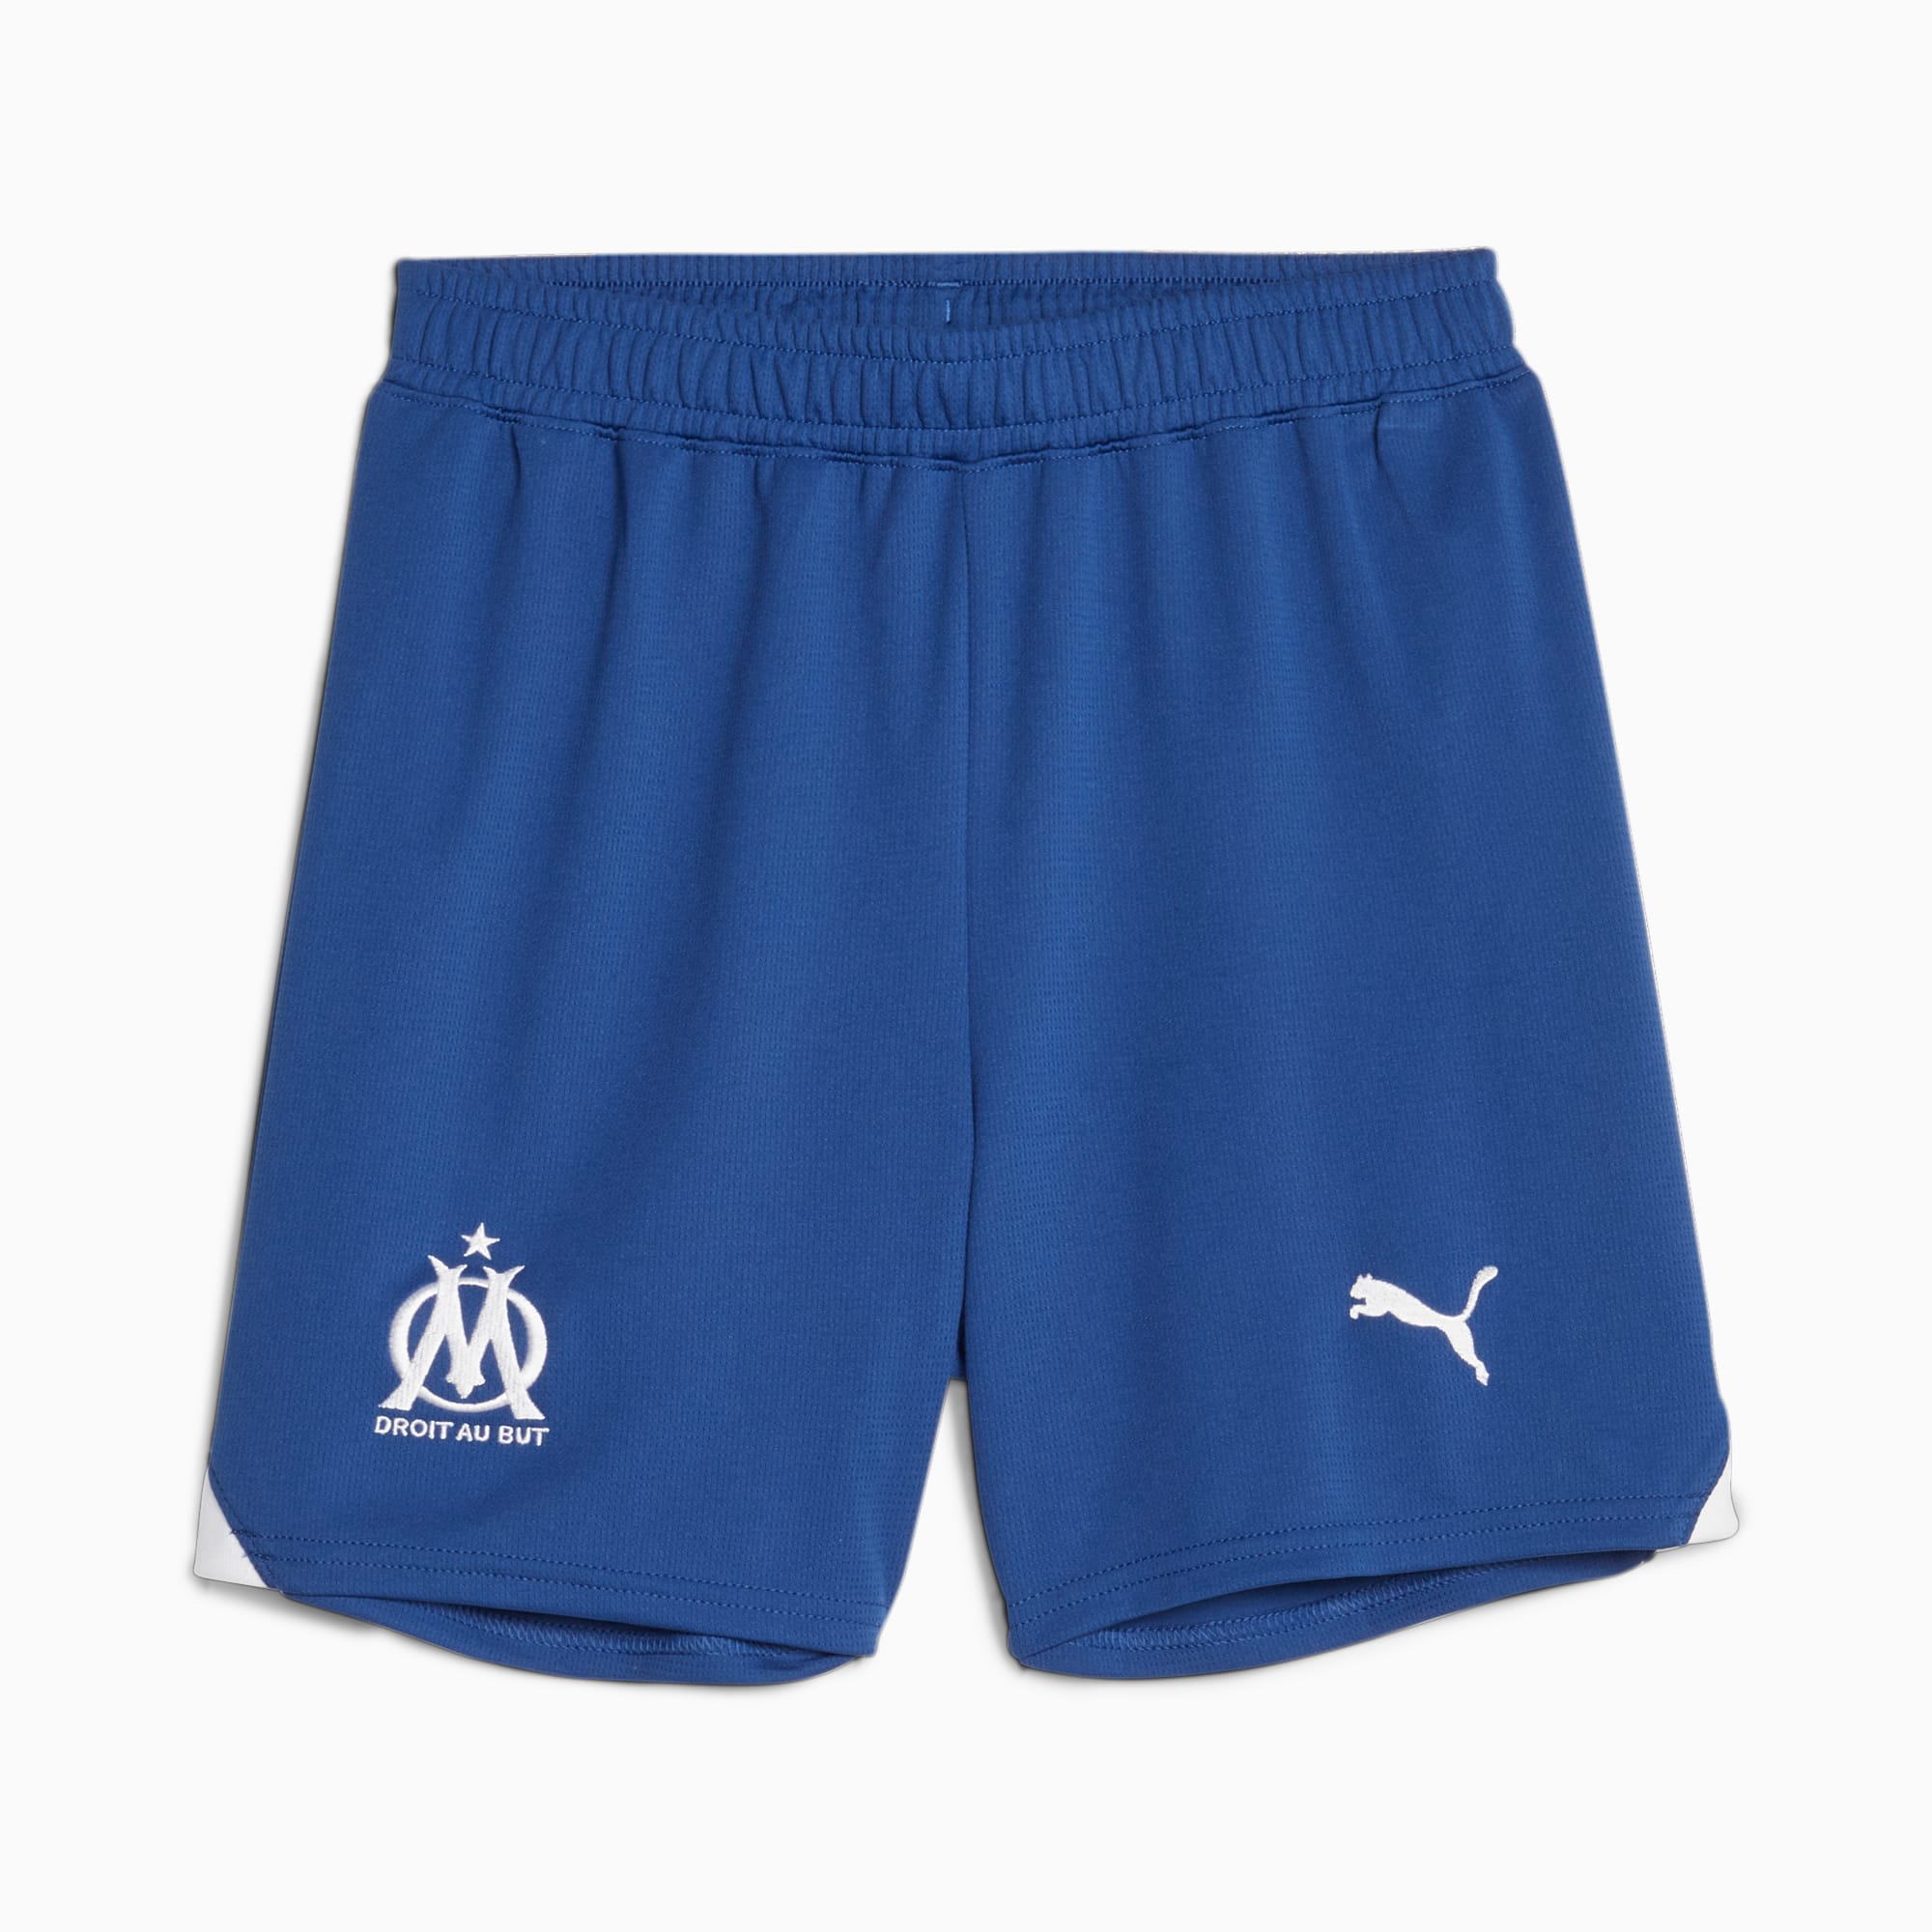 PUMA Olympique De Marseille Youth Football Shorts, Royal Blue